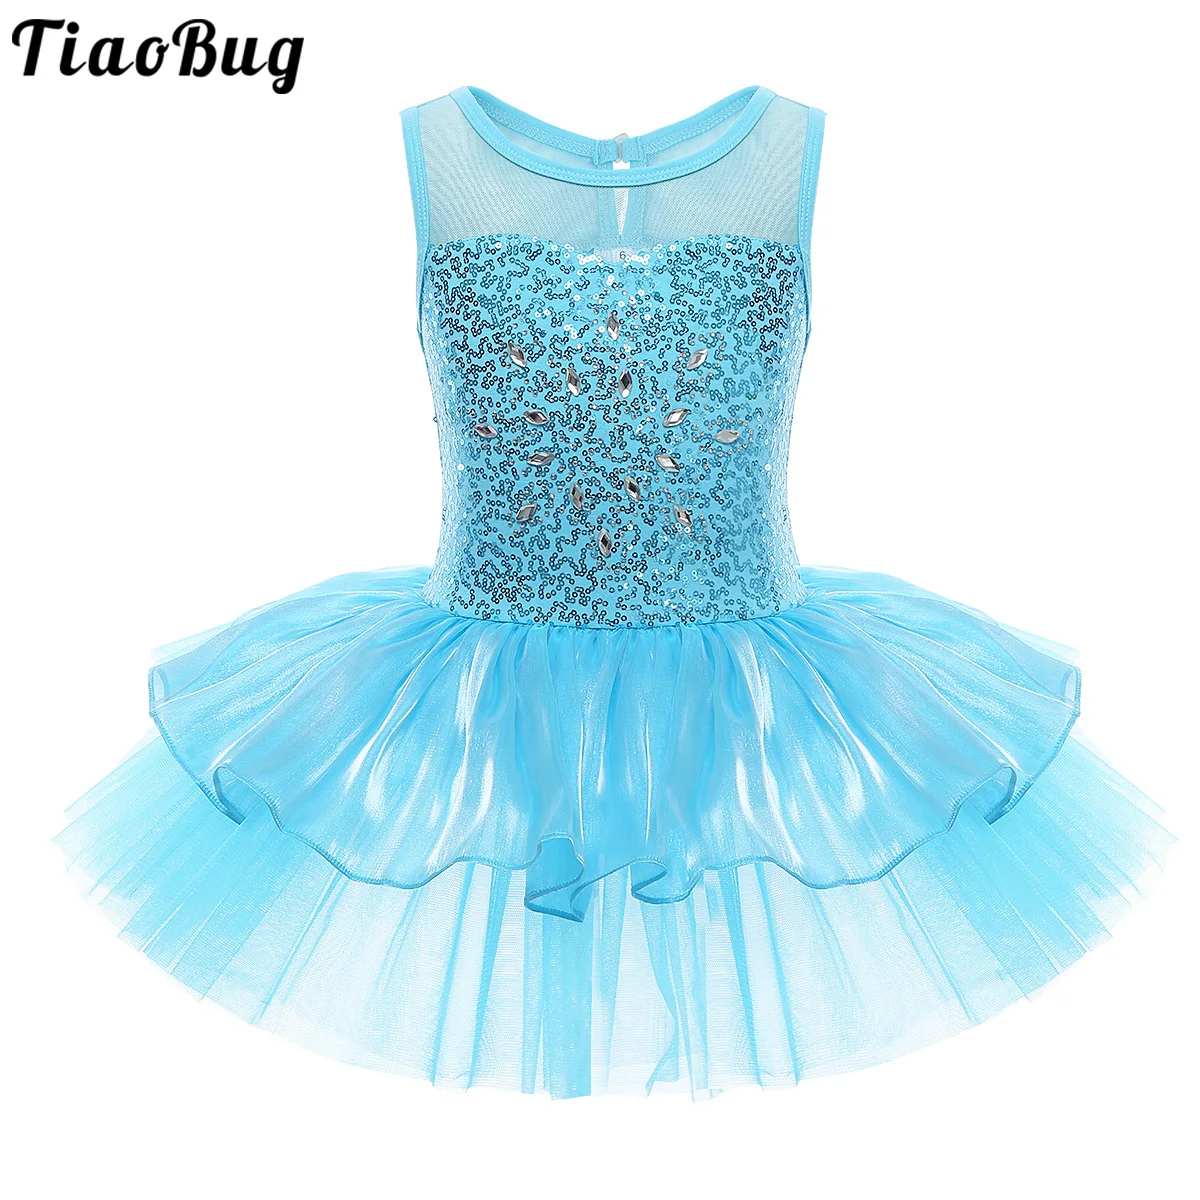 

TiaoBug 3 To 10 Years Girls Kids Sleeveless Sequins Ballet Dance Gymnastics Leotard Tutu Dress Stage Performance Costume